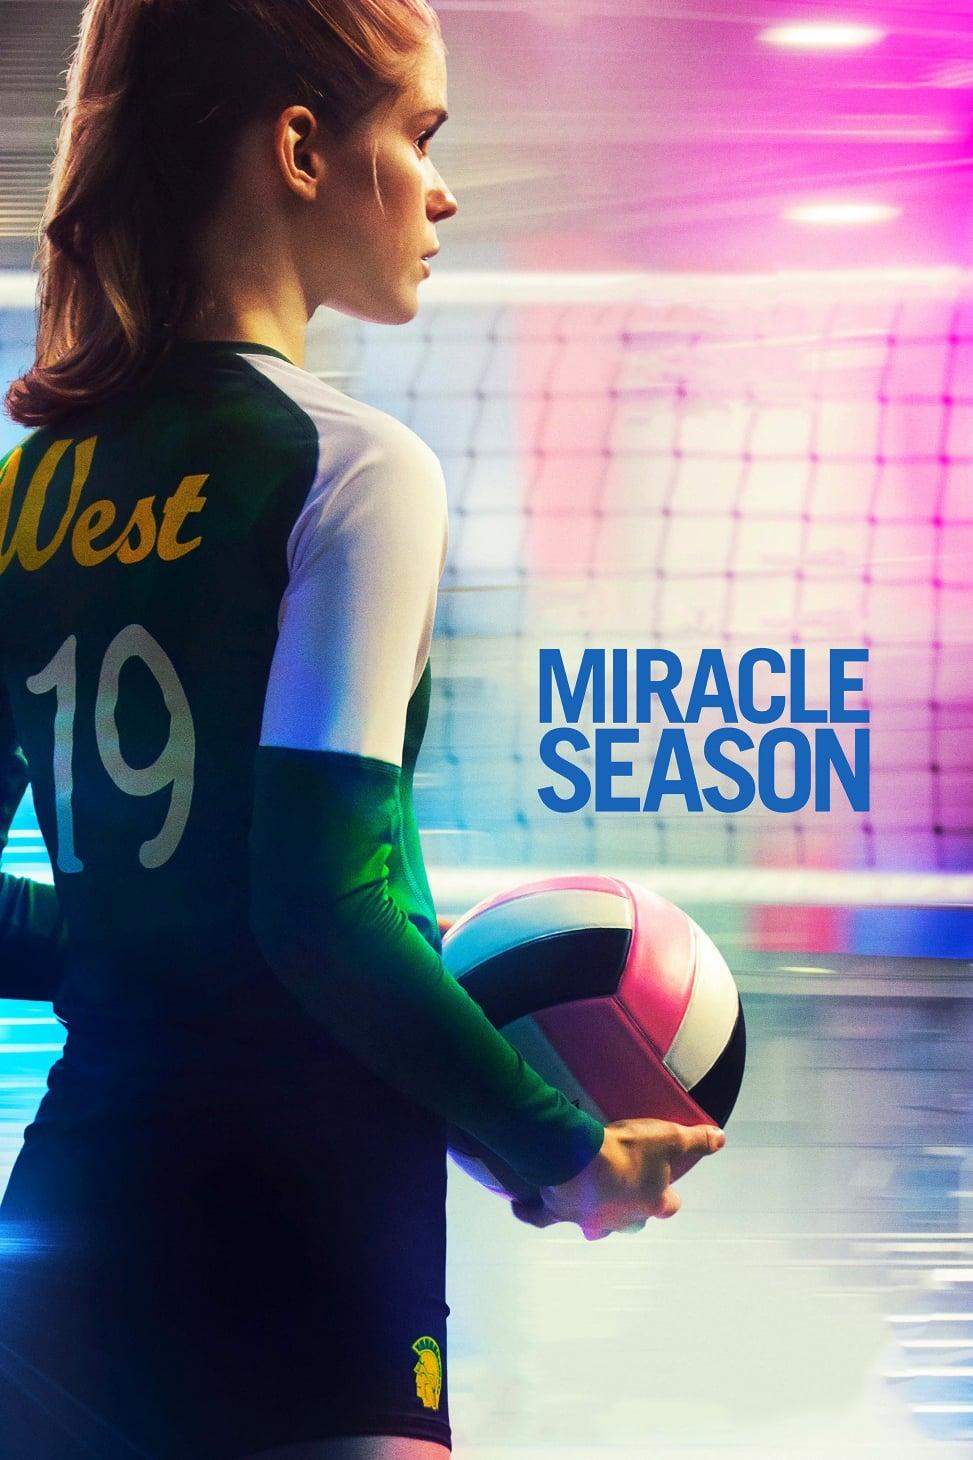 The Miracle Season poster